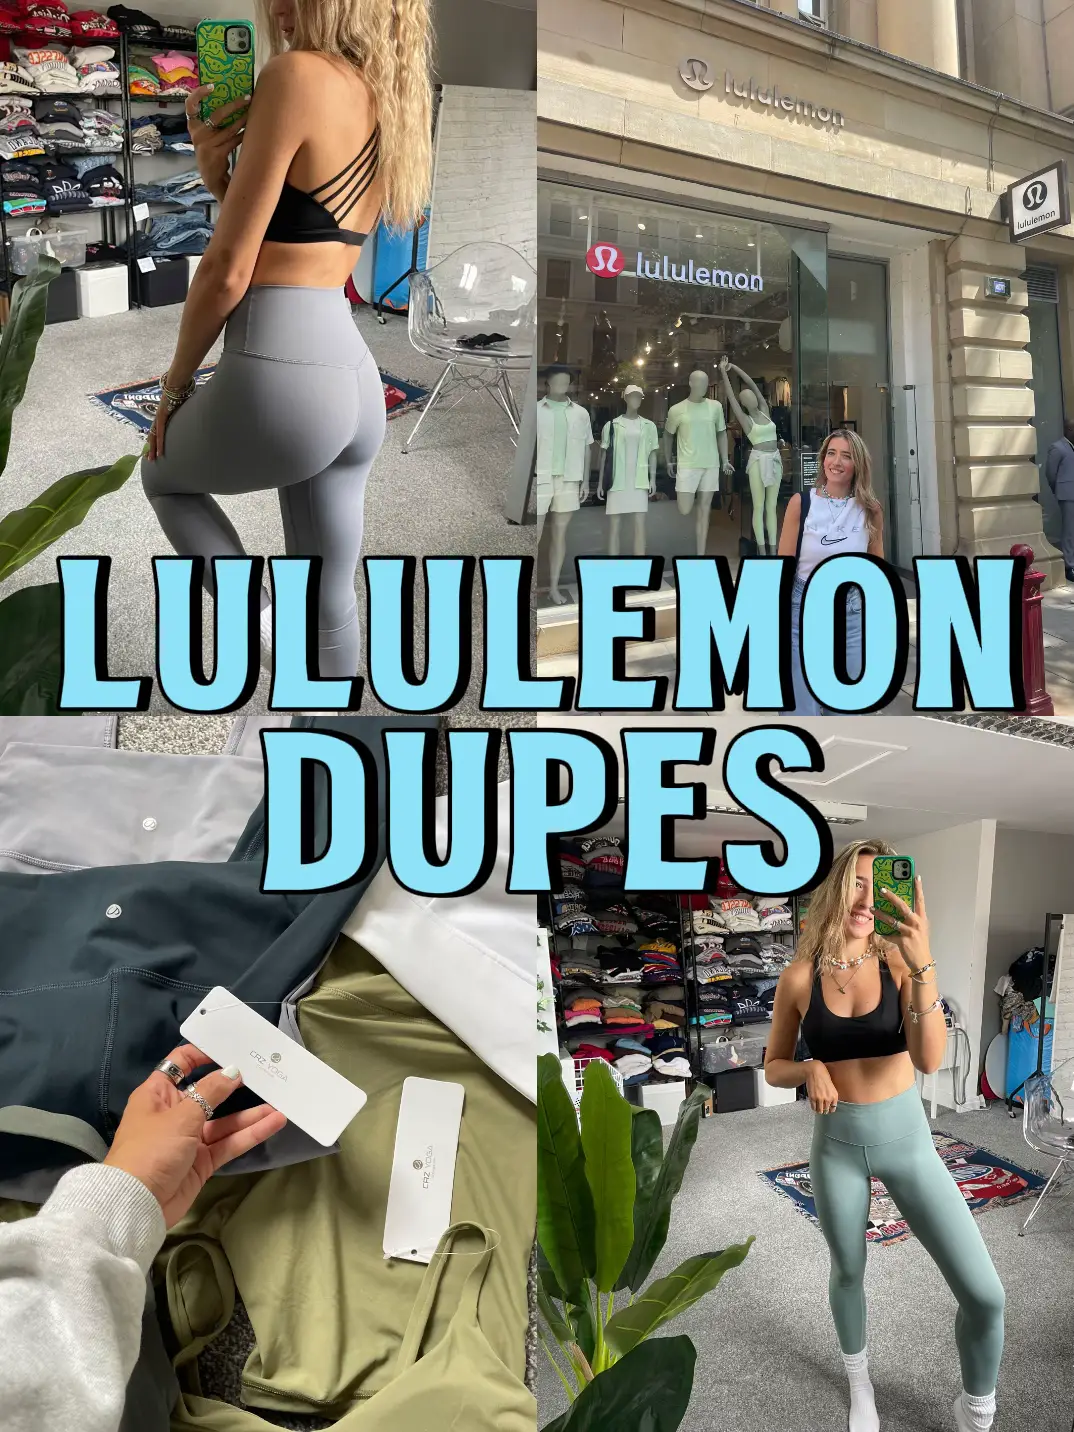 Fav Lululemon dupes 🤍, Gallery posted by nataliebrekka